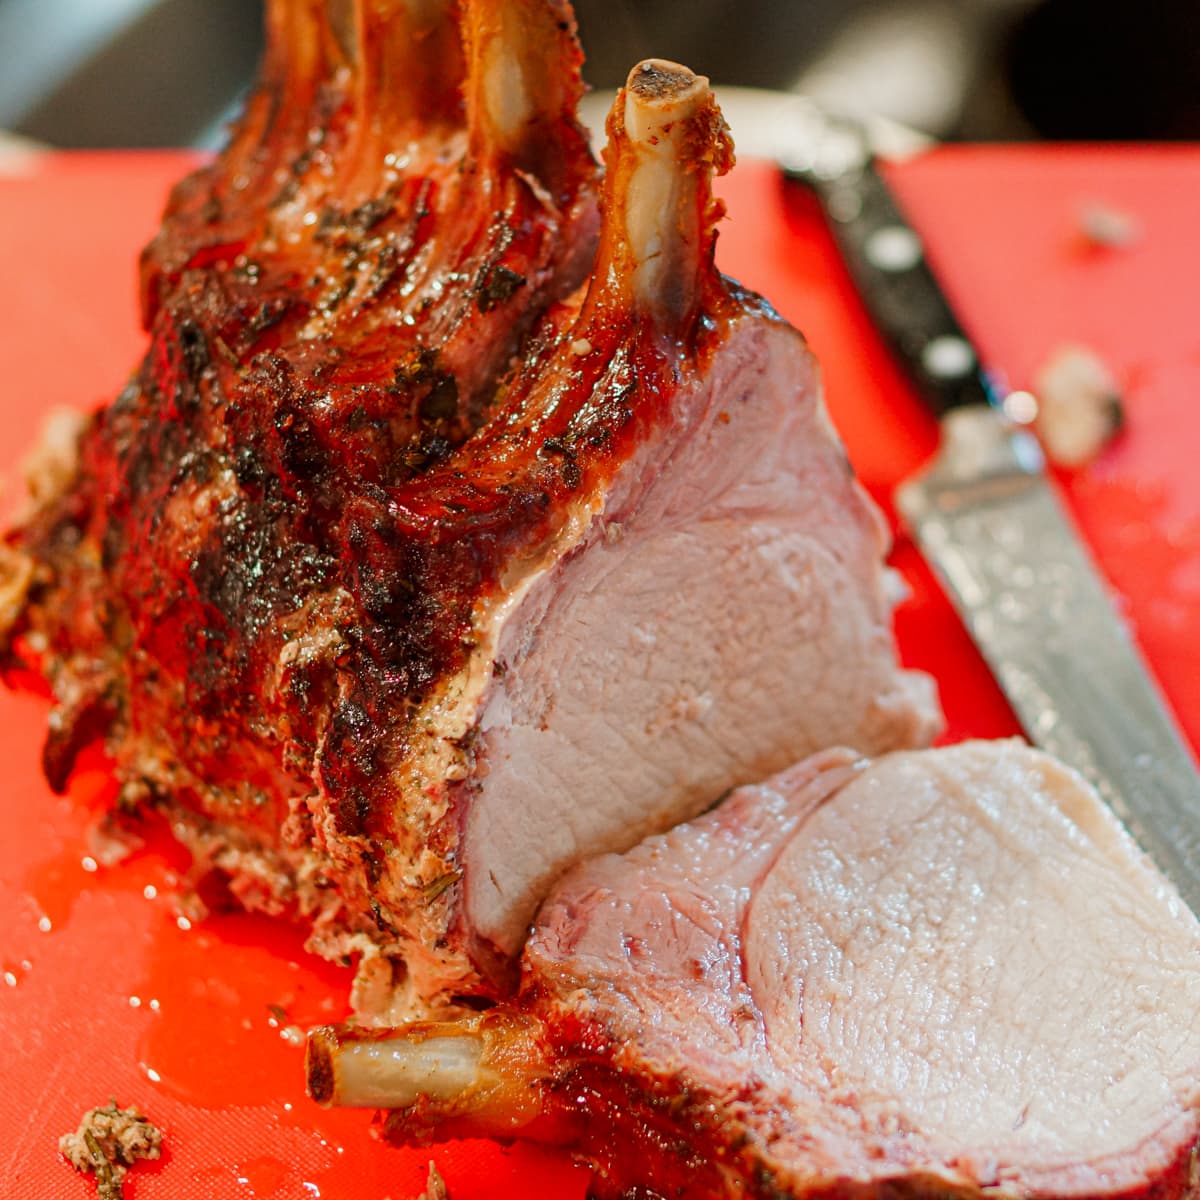 Smoked pork crown roast on a cutting board.